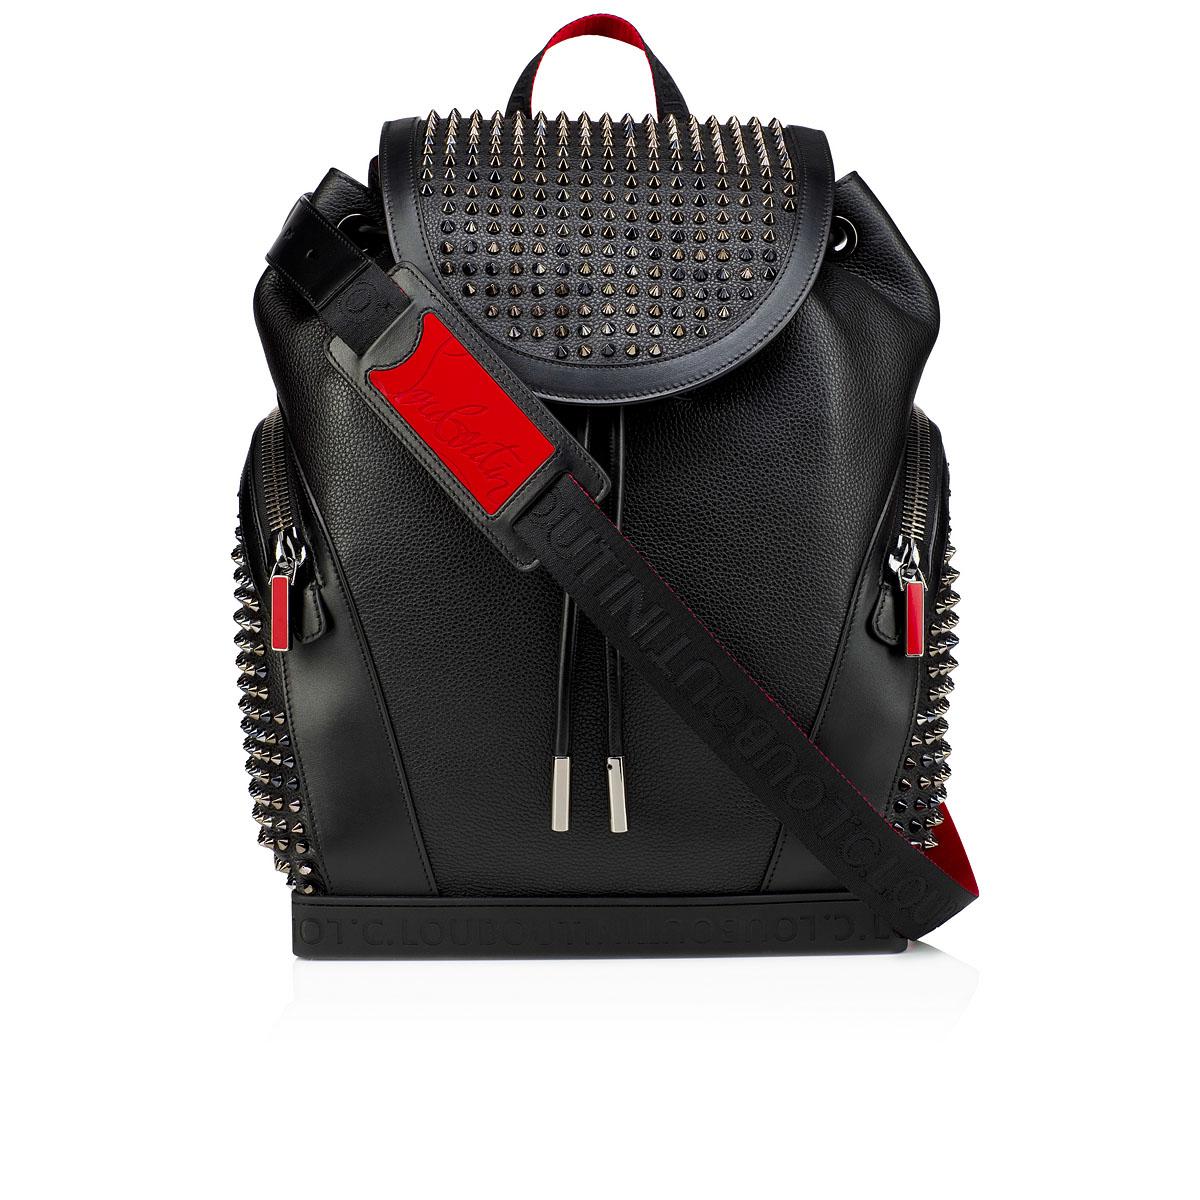 Black Explorafunk spikes leather cross-body bag, Christian Louboutin